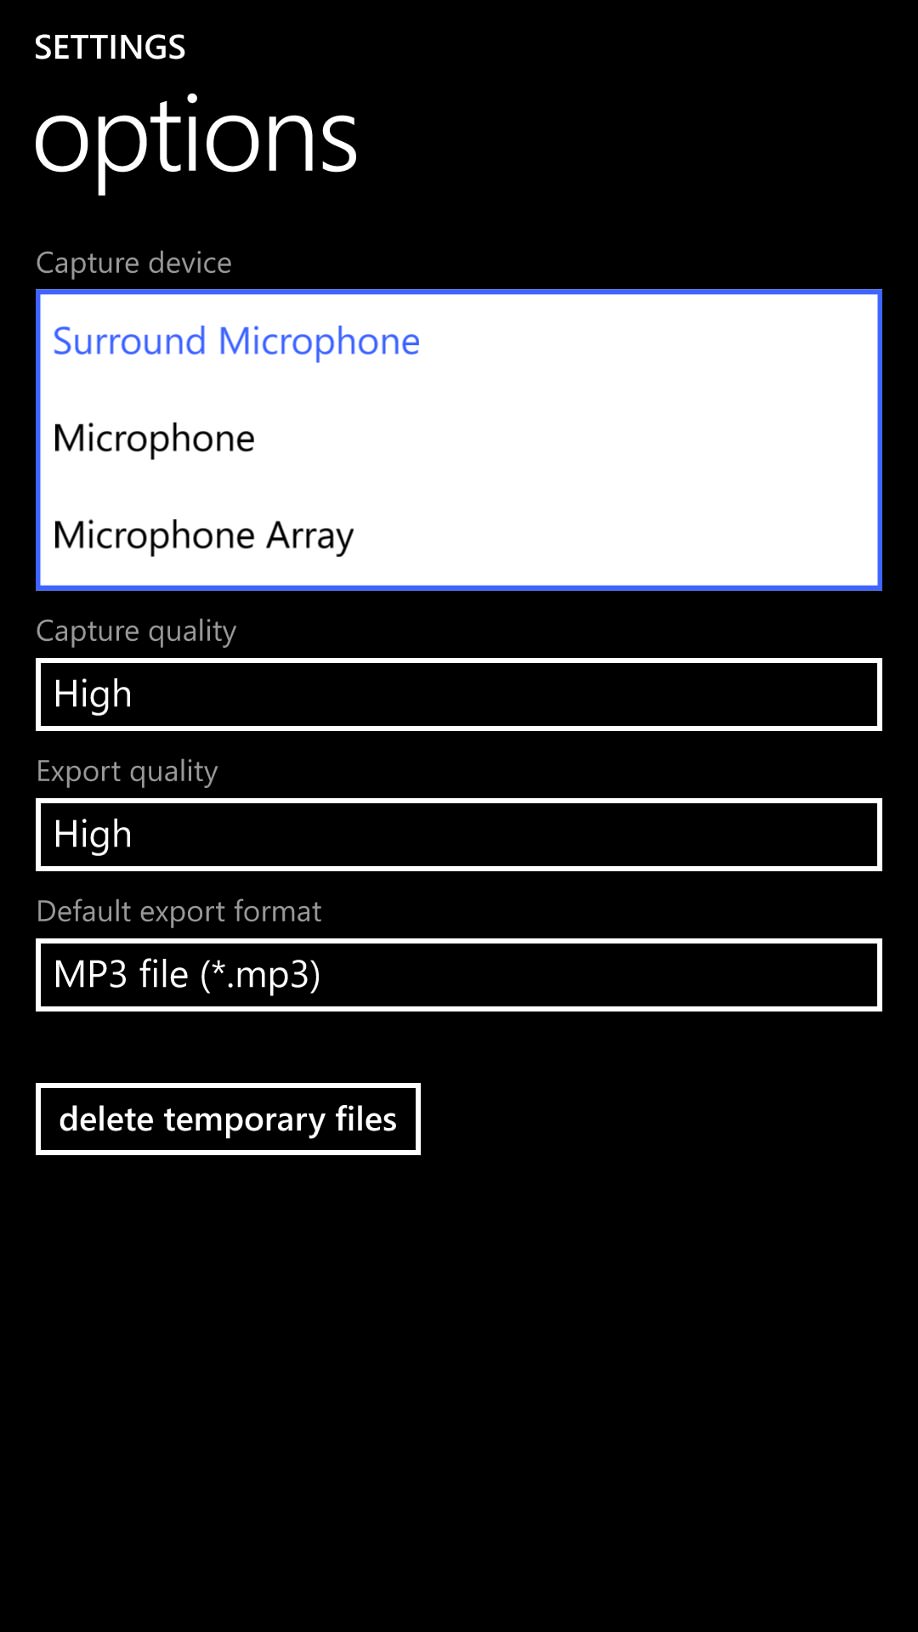 Windows phone tips and tricks   support.microsoft.com